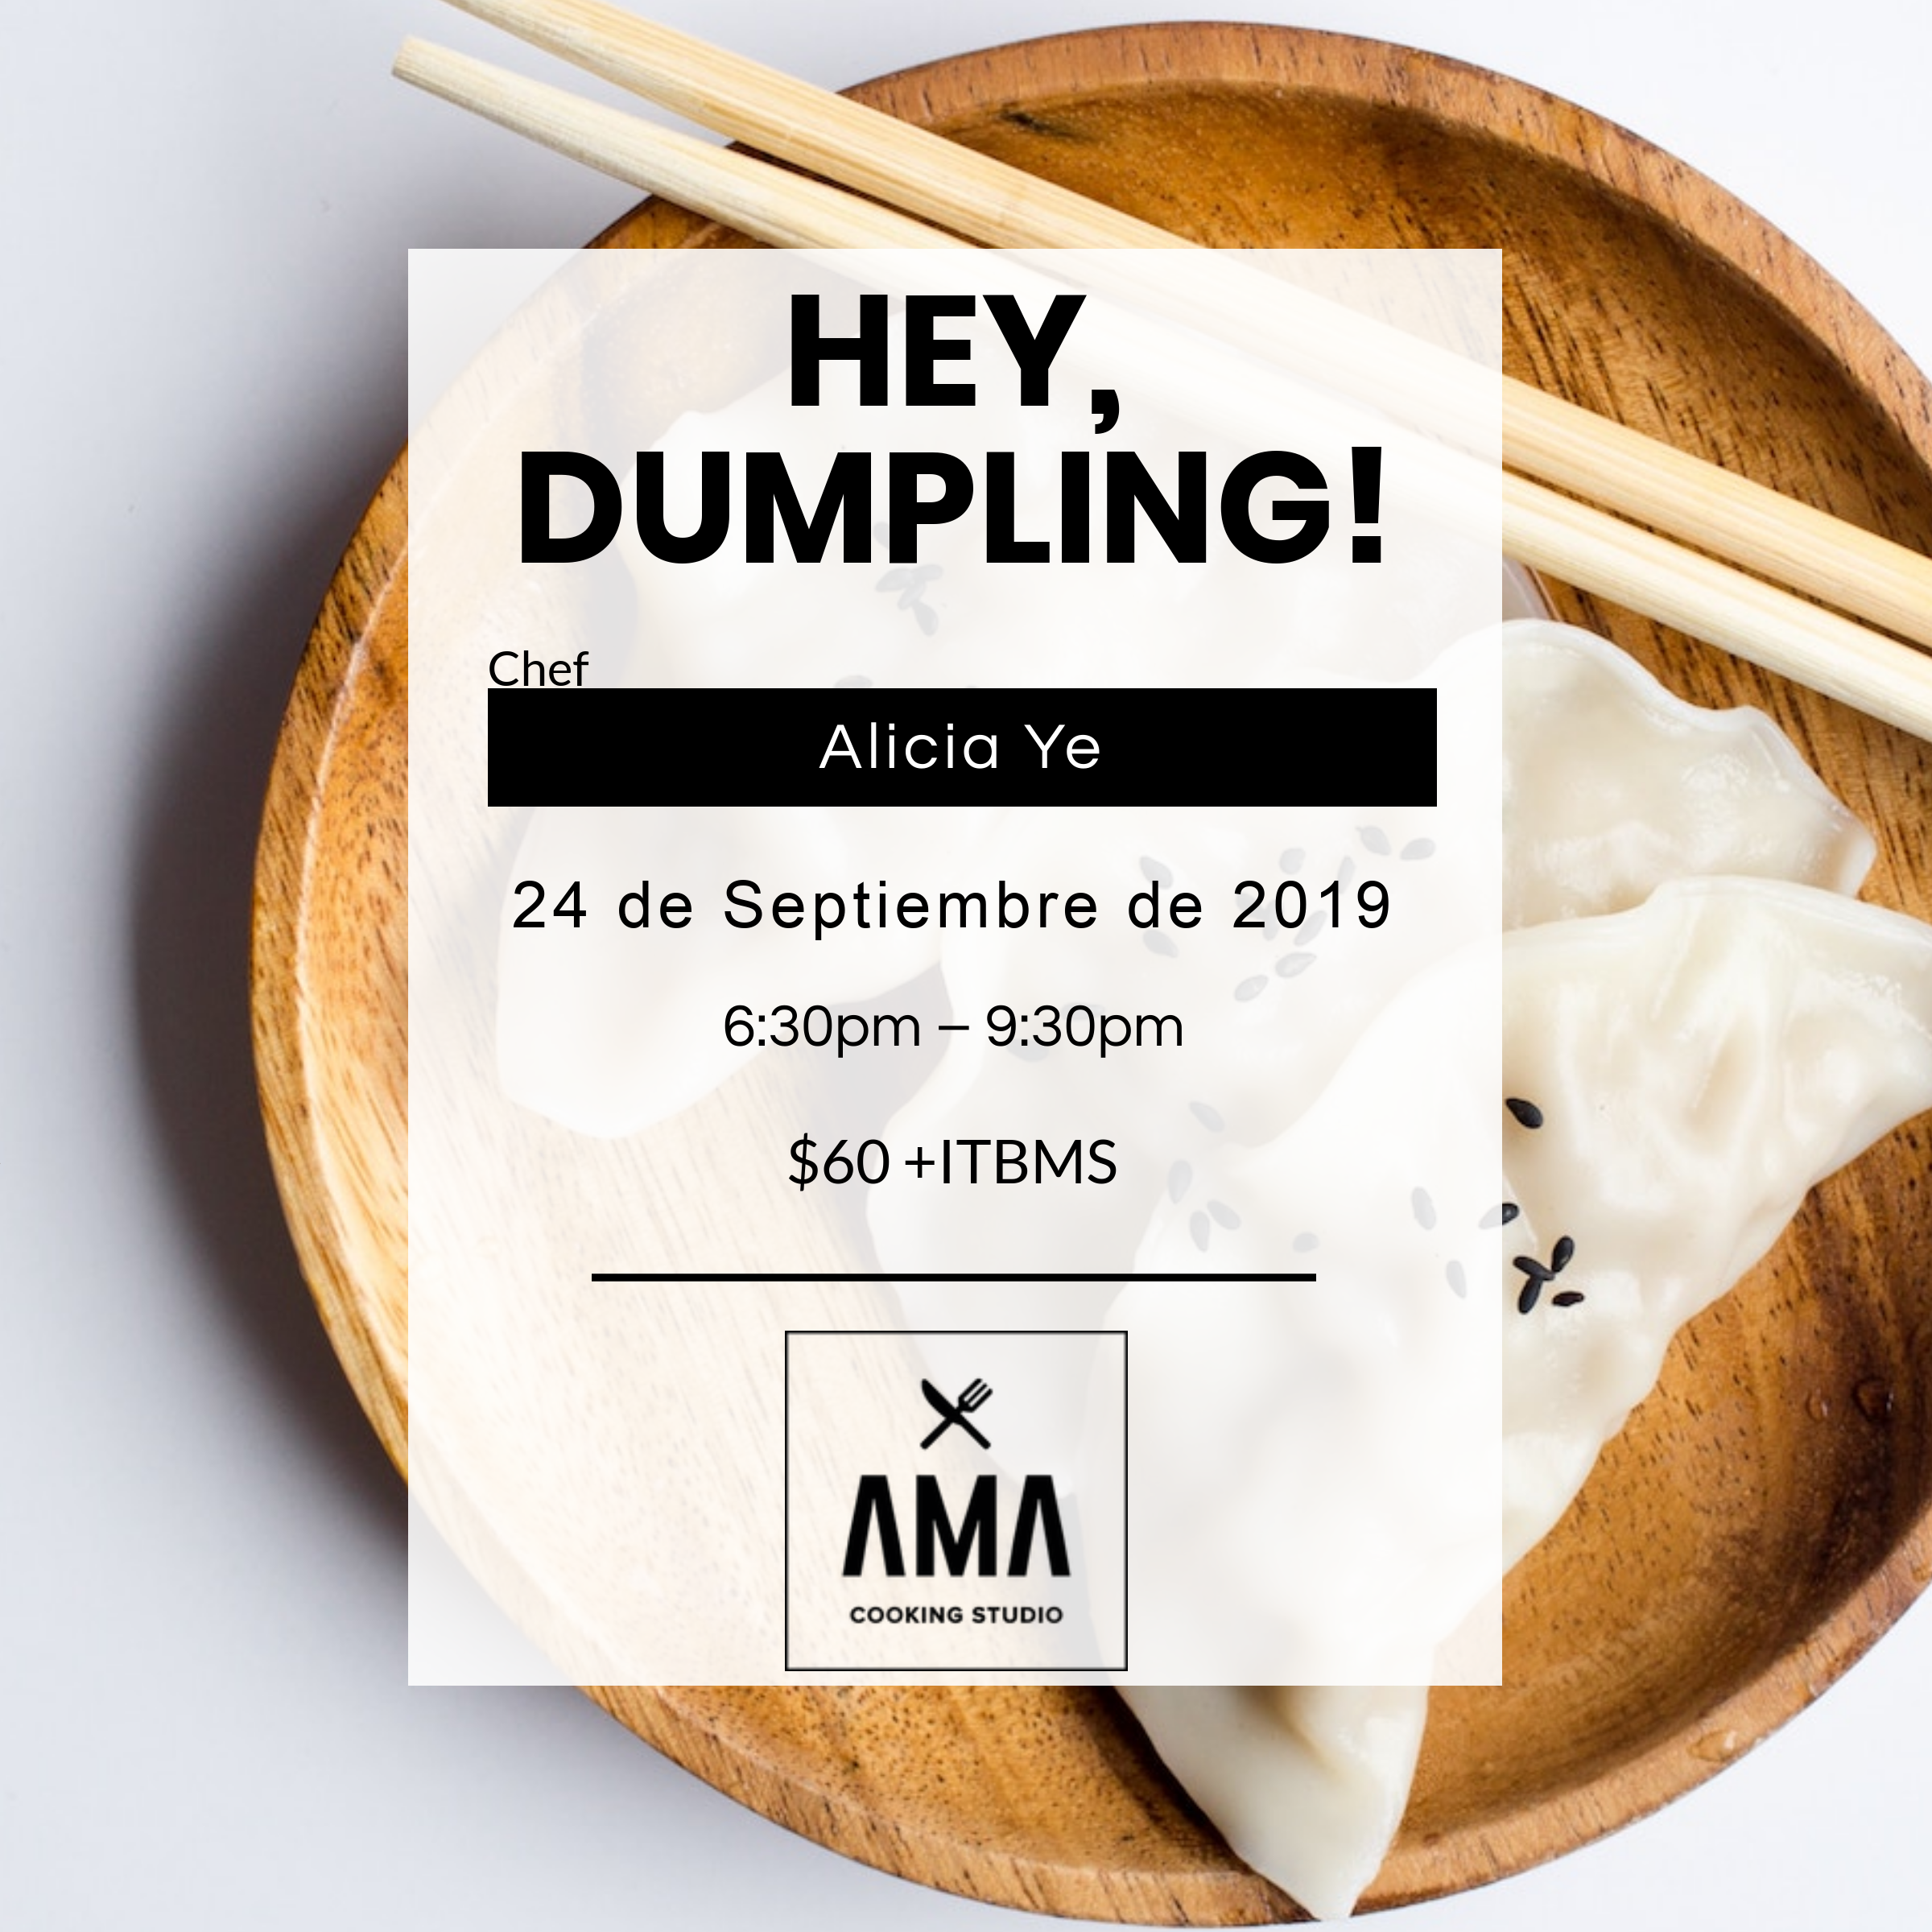 Hey, Dumpling!